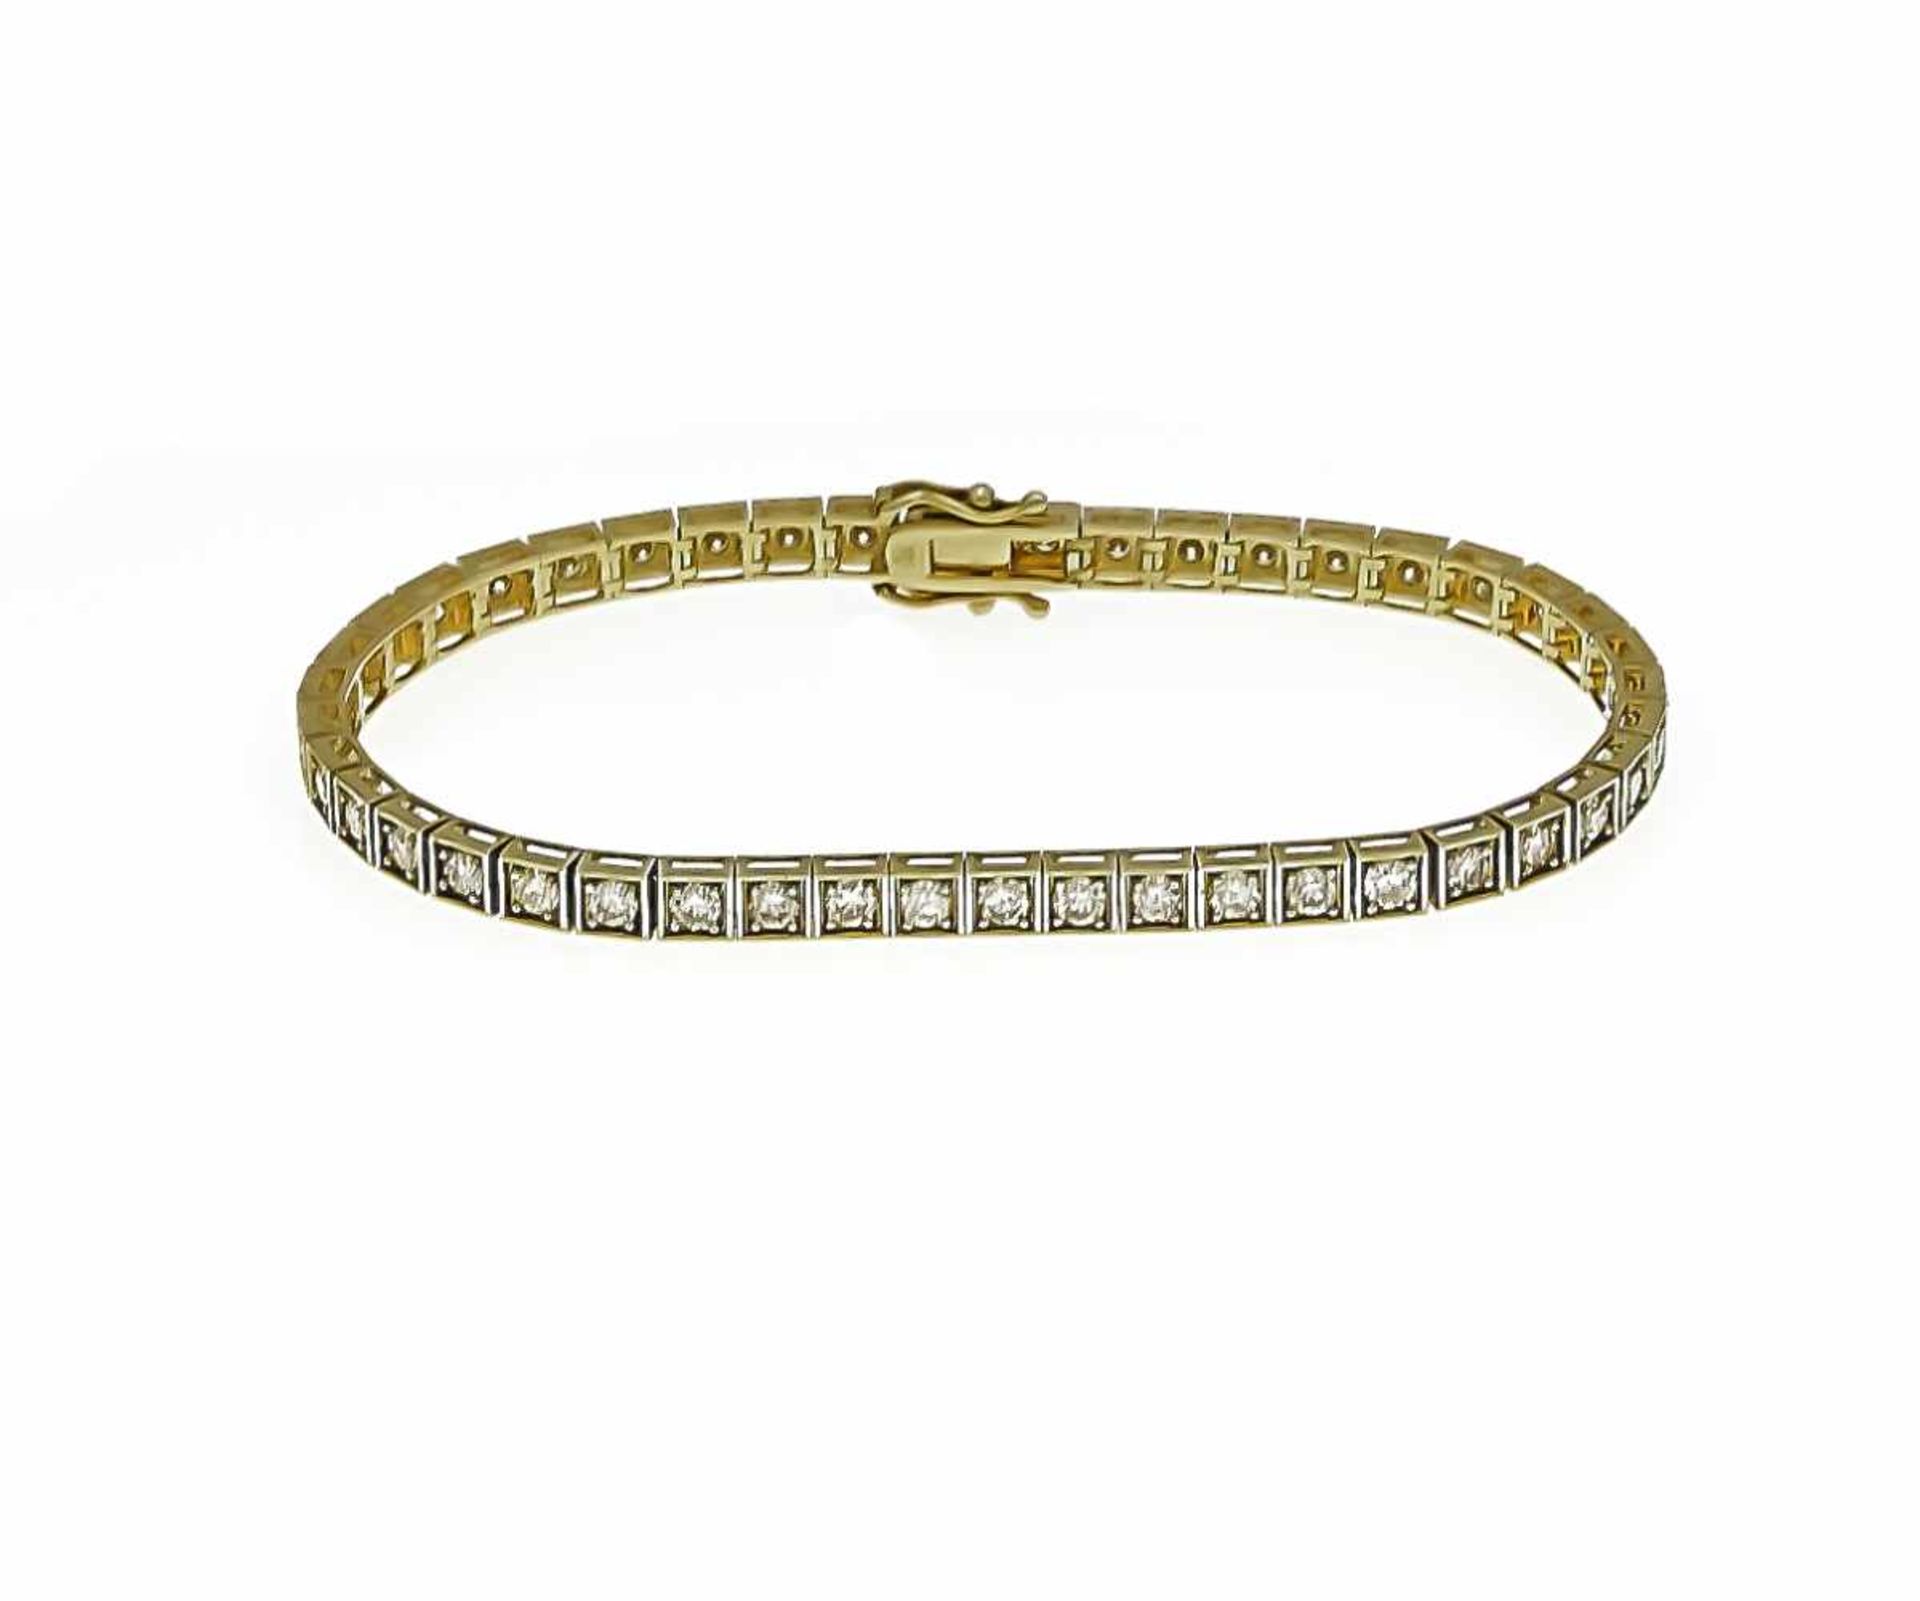 Brilliant bracelet GG 585/000 with 44 brilliant-cut diamonds, totaling 3.0 ct TW-W /